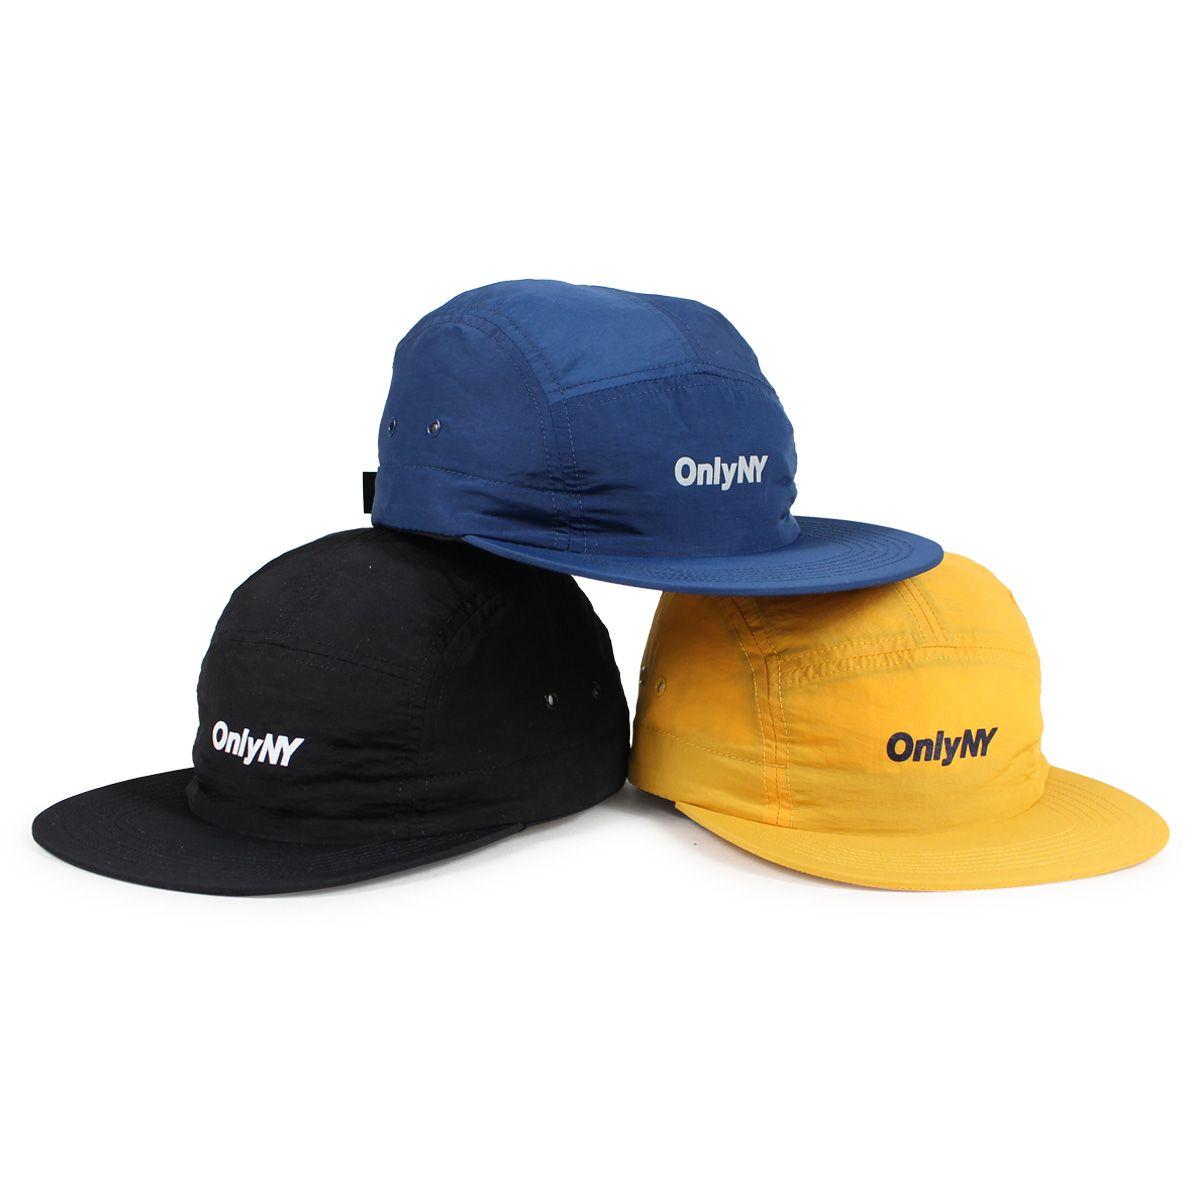 Gold NY Logo - ALLSPORTS: ONLY NY LOGO 5-PANEL only New York cap hat men gap Dis ...